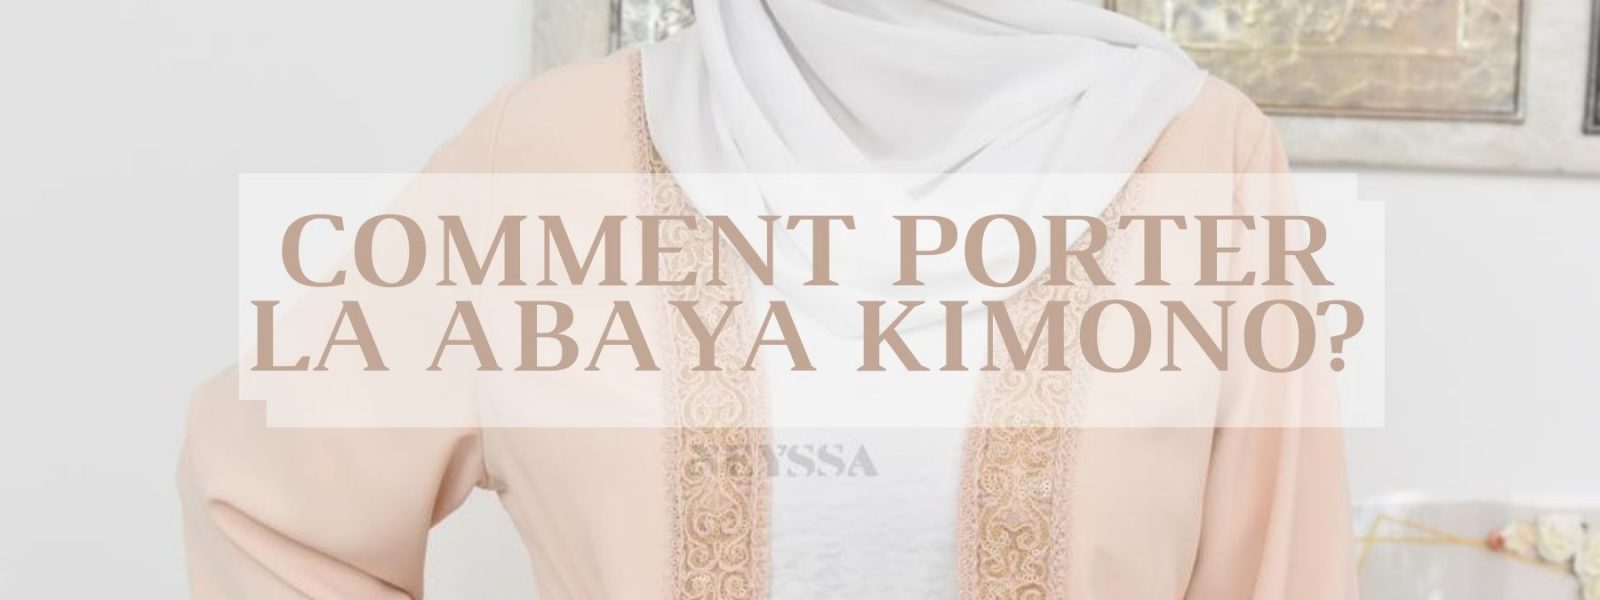 Comment porter la abaya kimono Neyssa